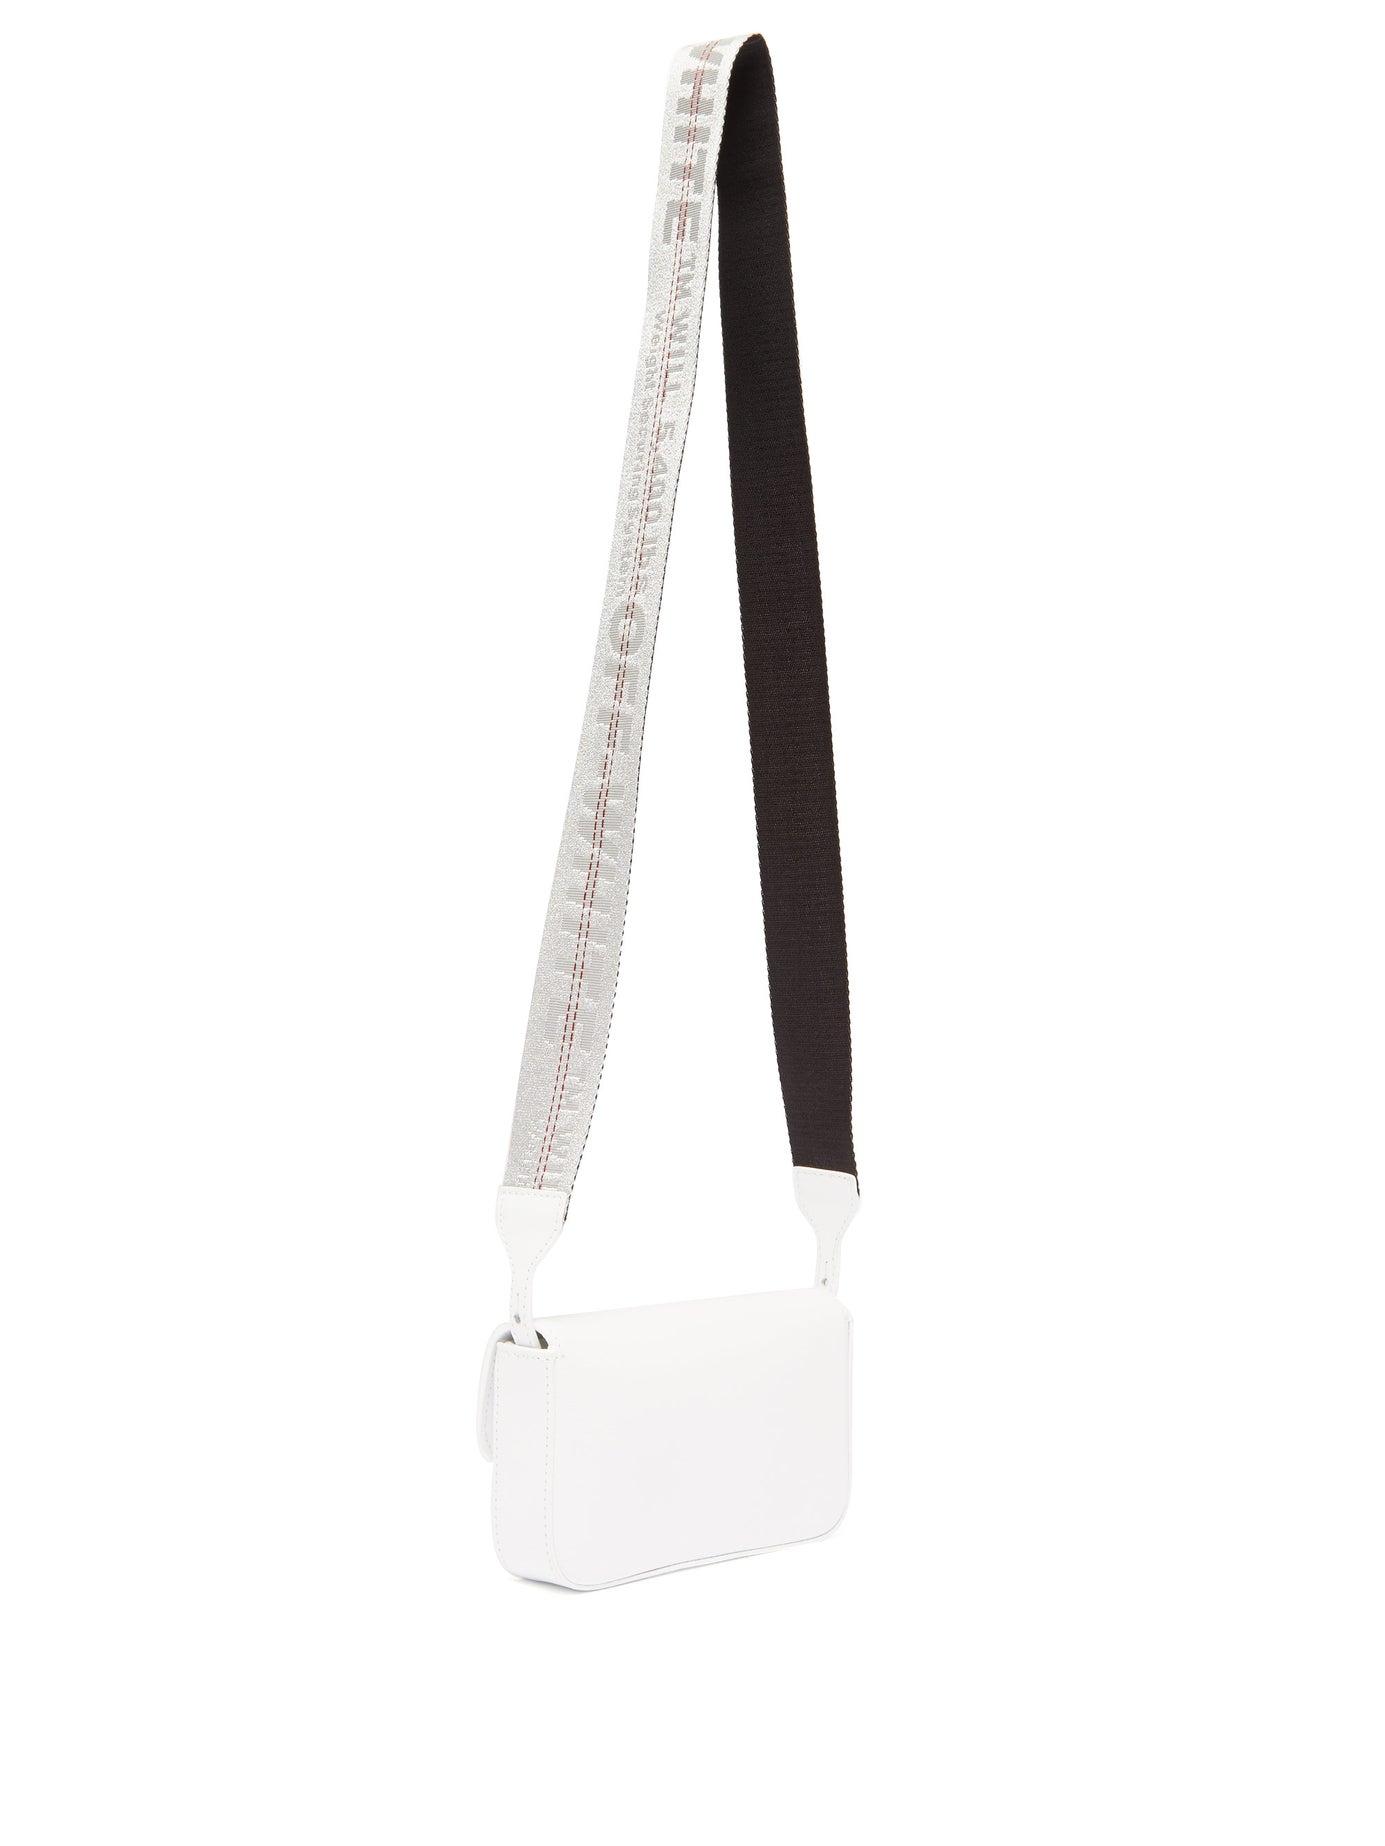 Off-White c/o Virgil Abloh Logo Strap Saffiano Leather Cross Body Bag in White for Men - Lyst